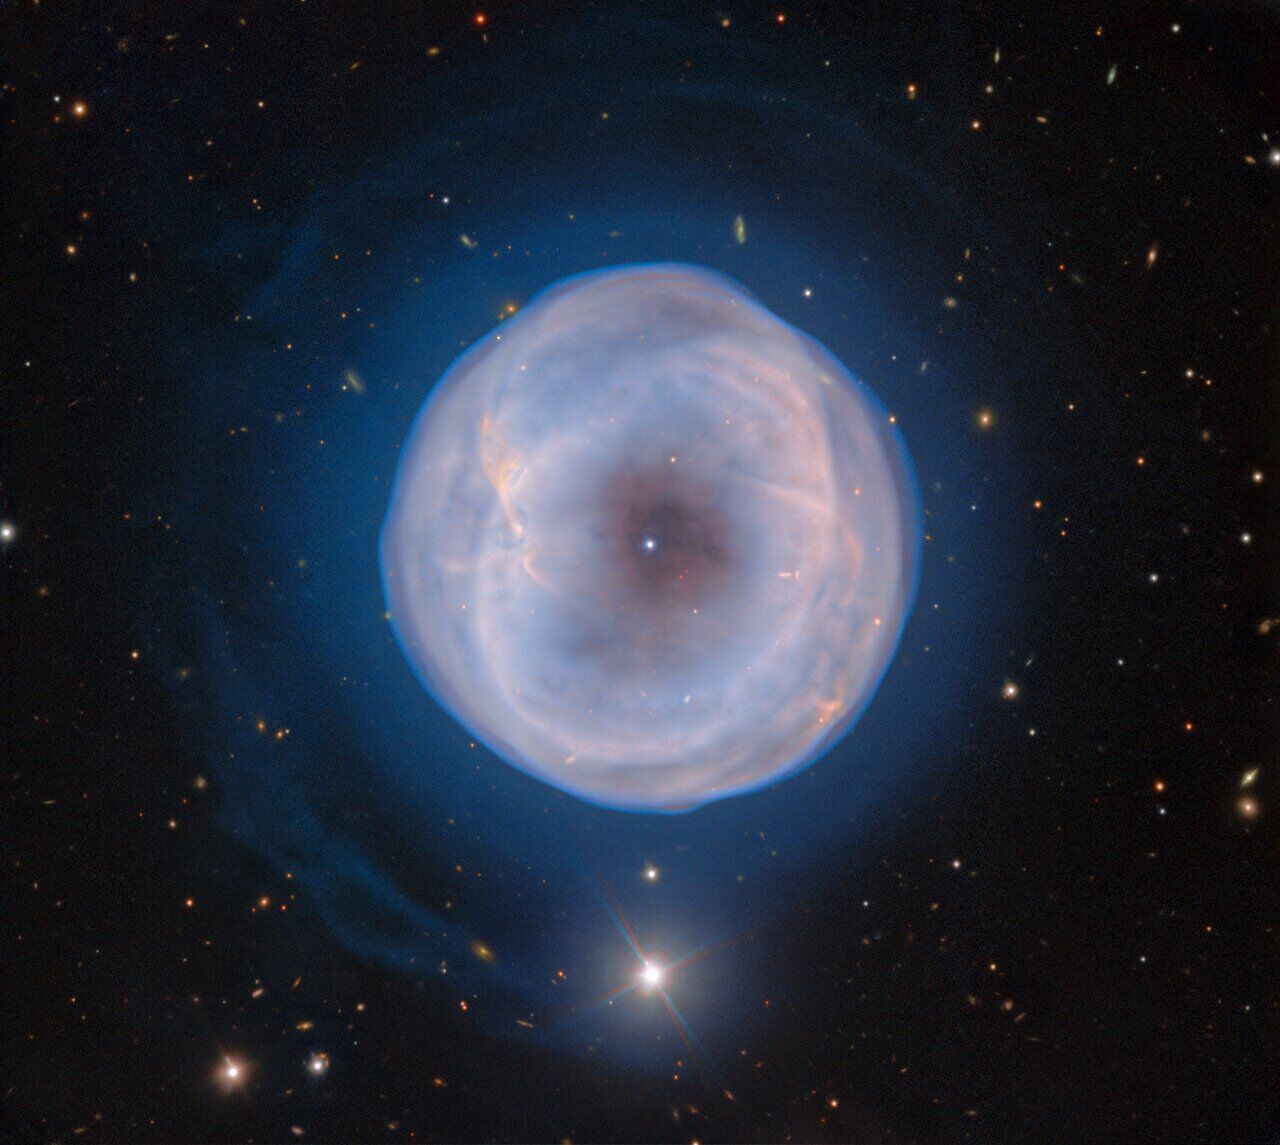 Planetary nebula IC 5148